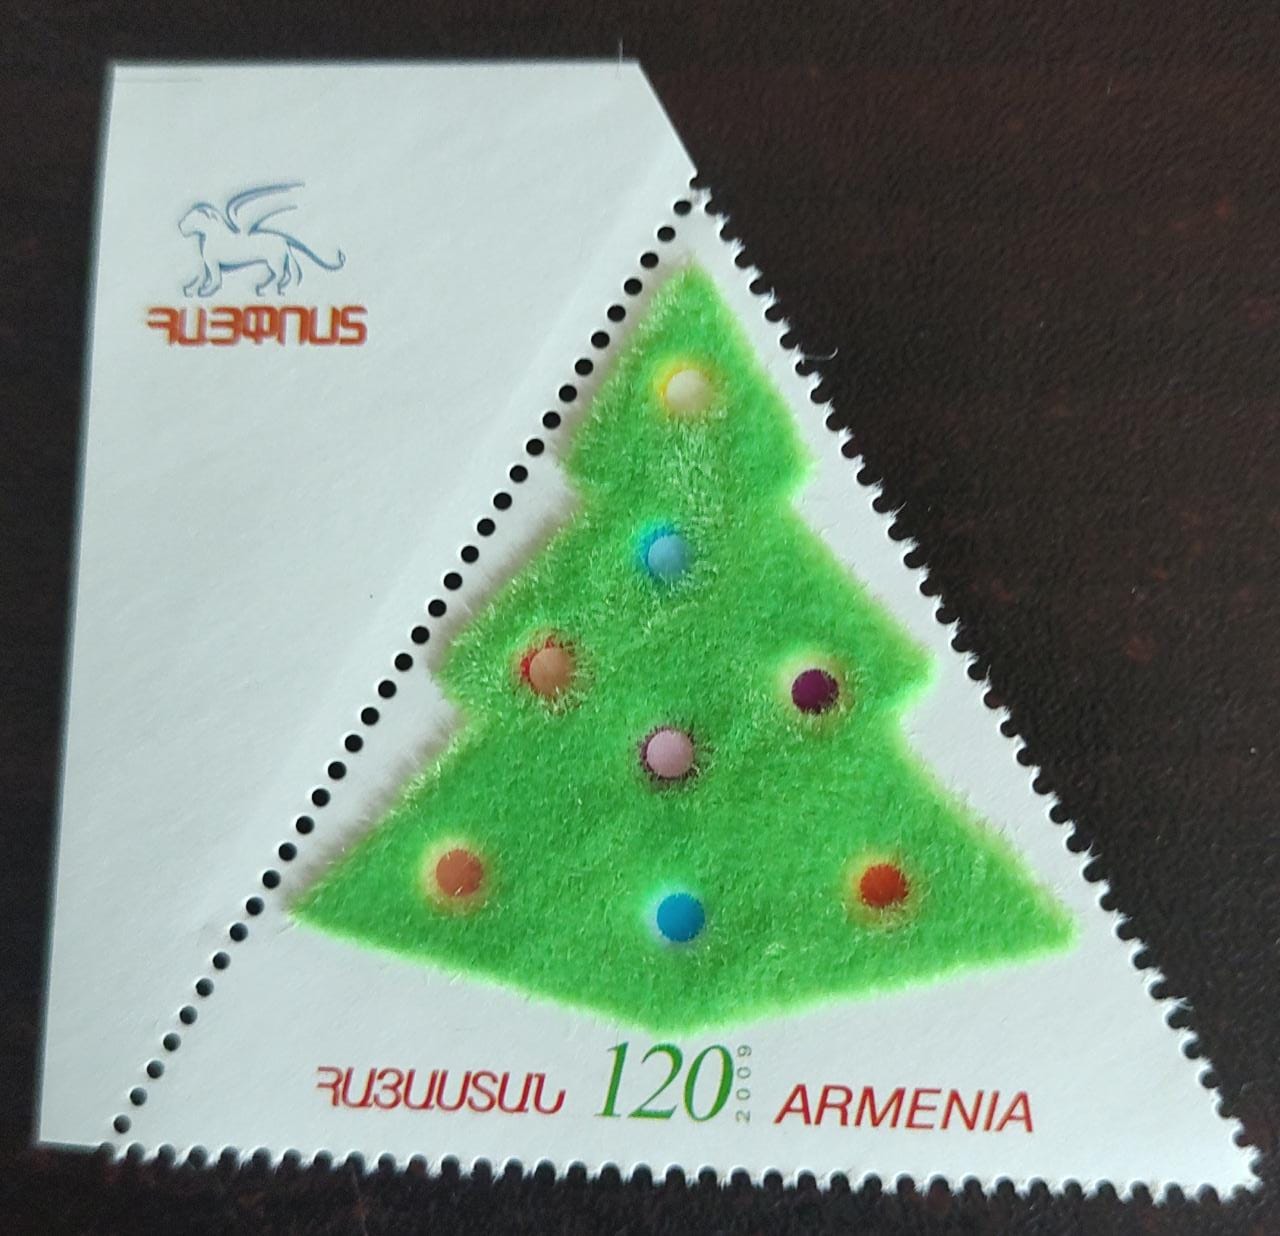 Armenia 2009 unusual Velvet Christmas tree stamp with odd triangular shape